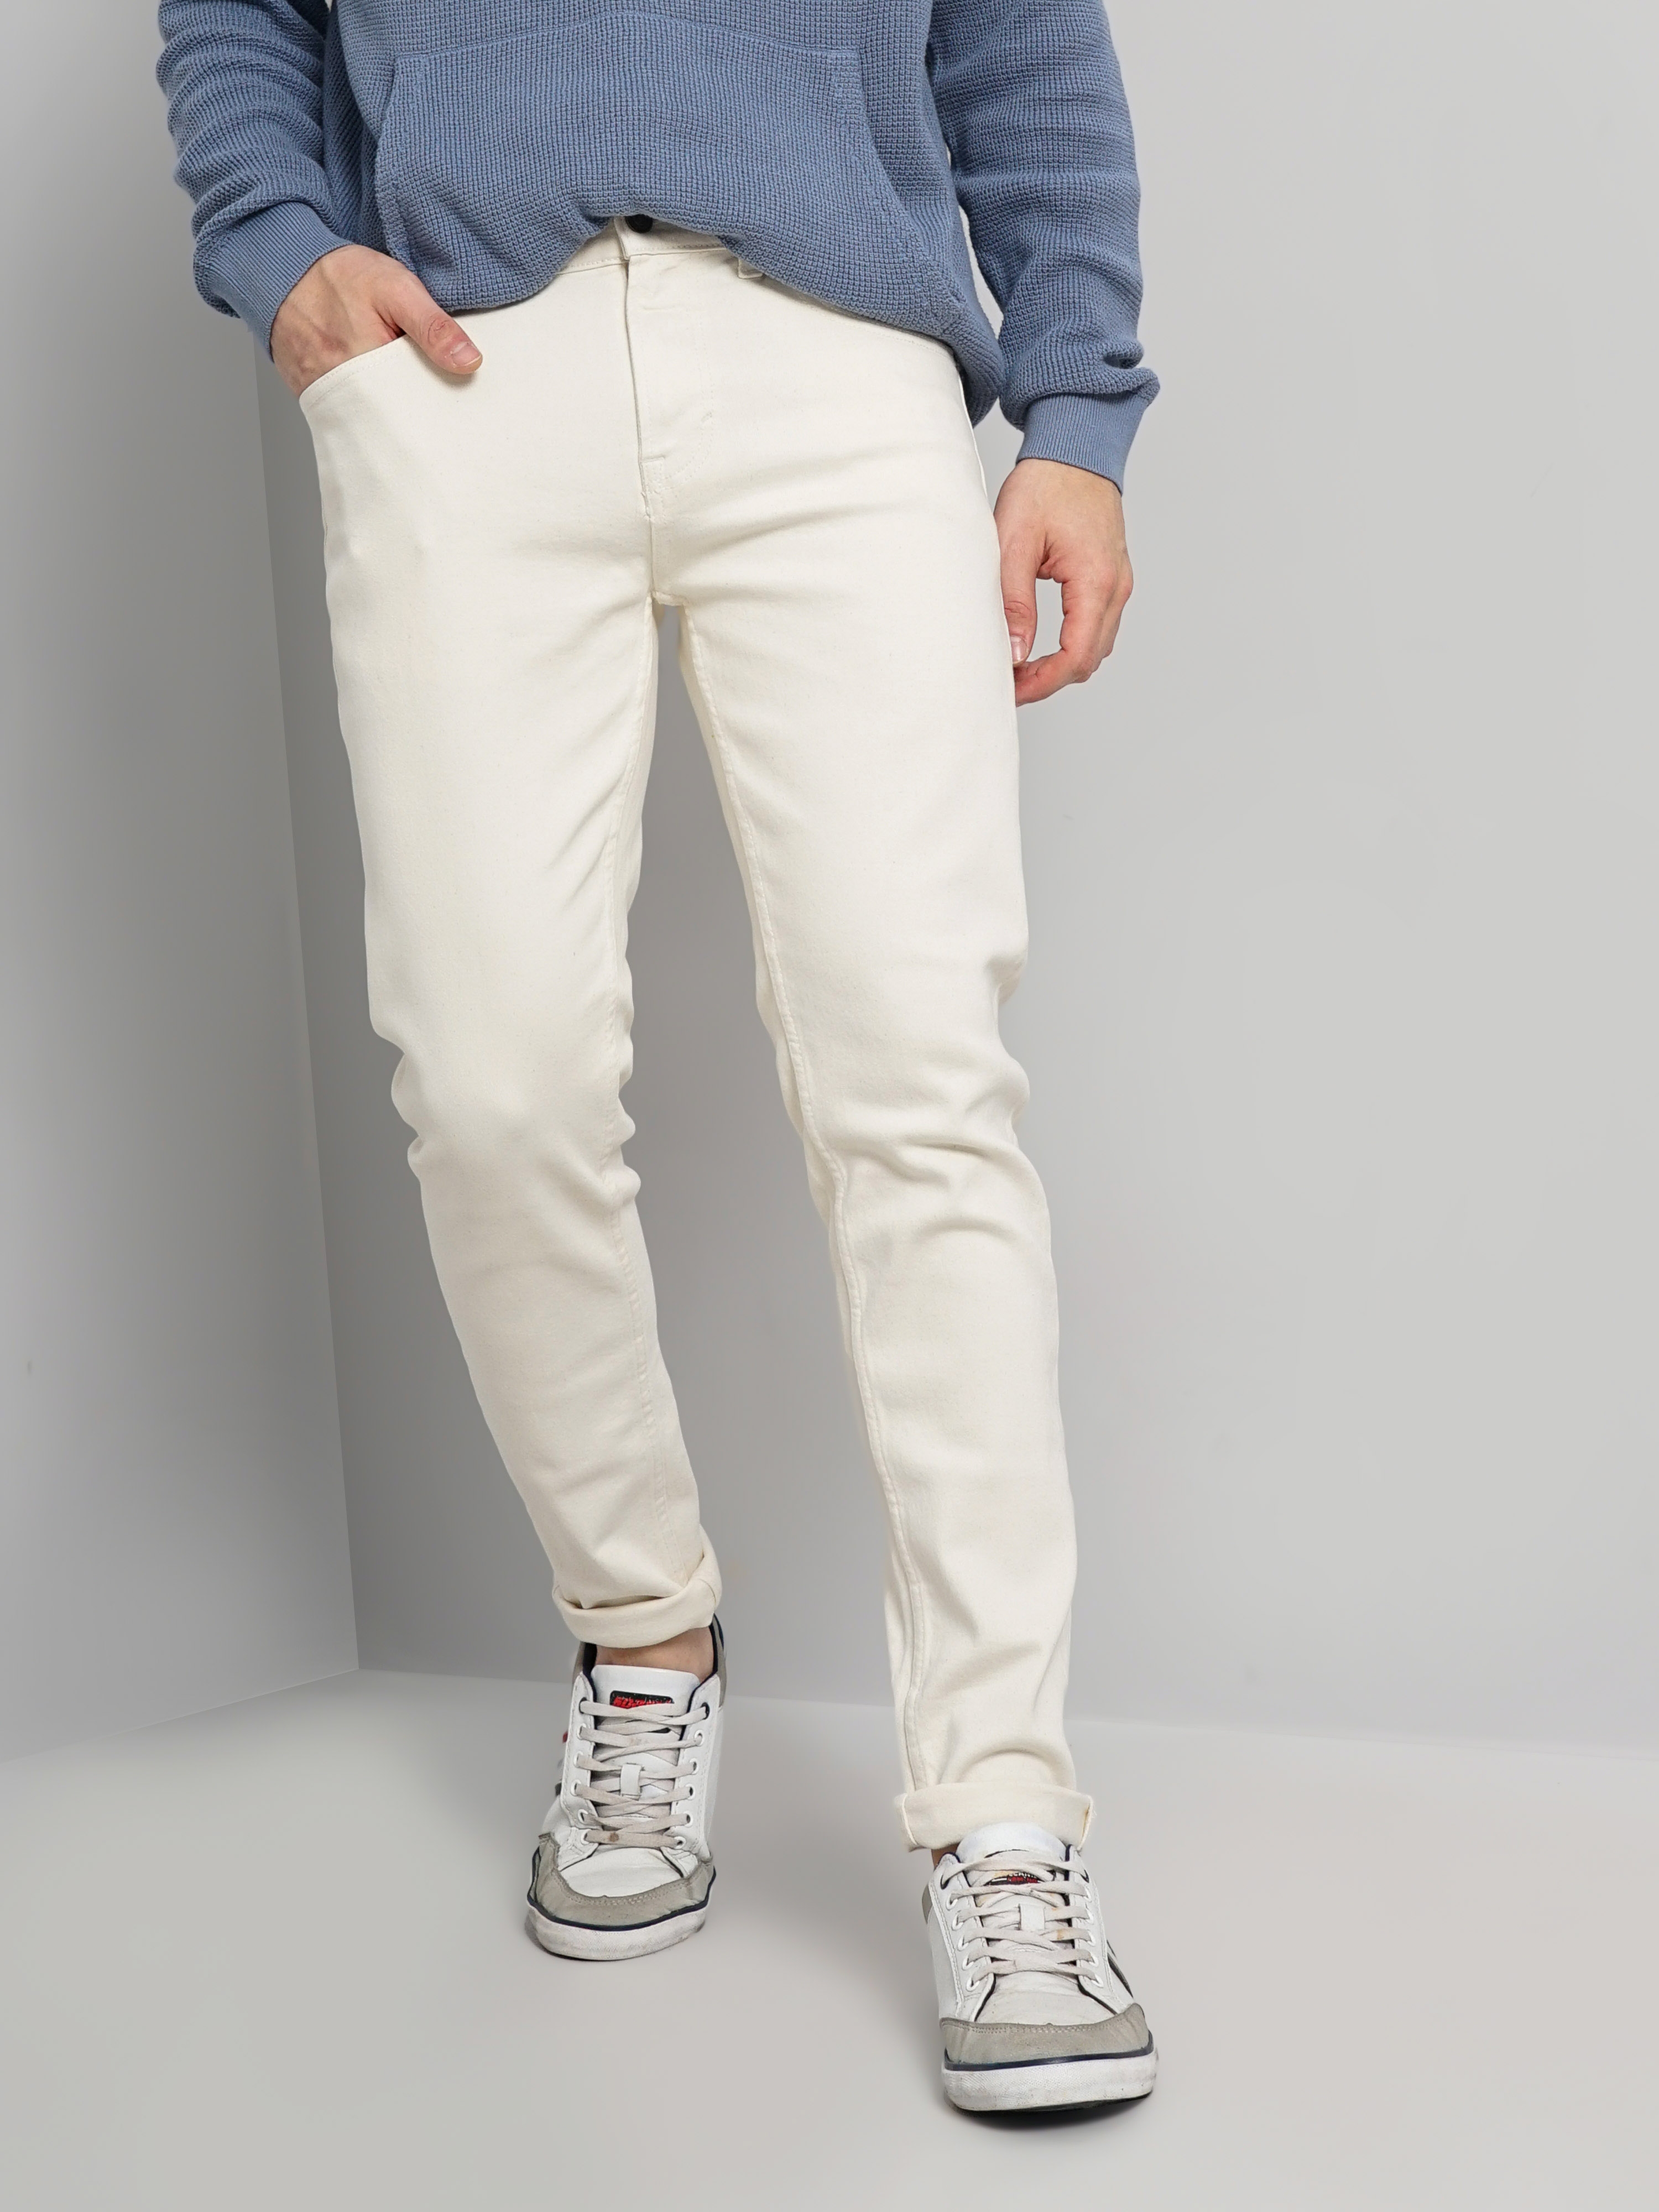 Celio Men's Colored Jeans